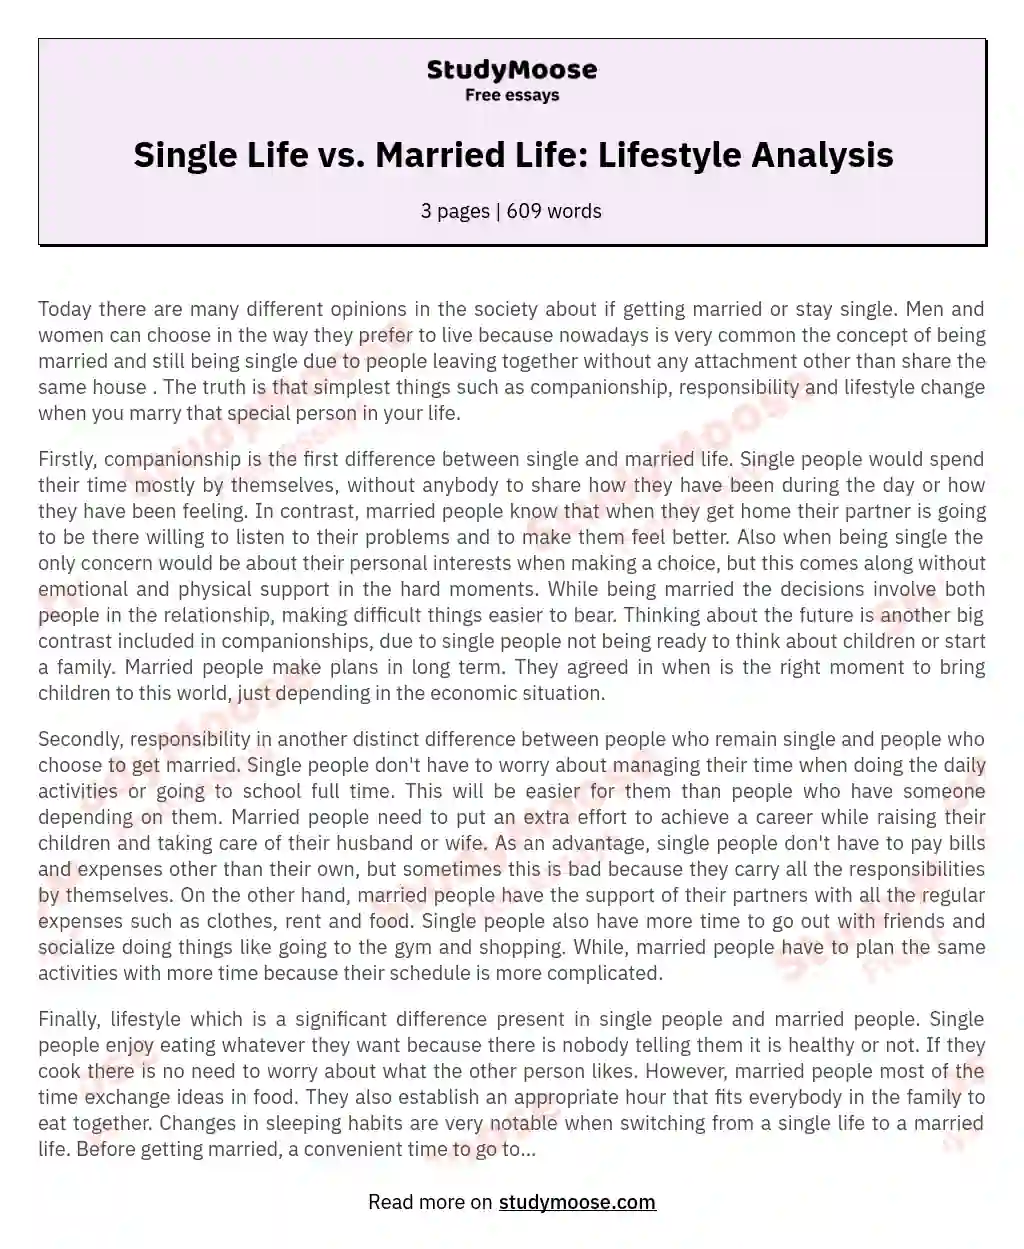 Single Life vs. Married Life: Lifestyle Analysis